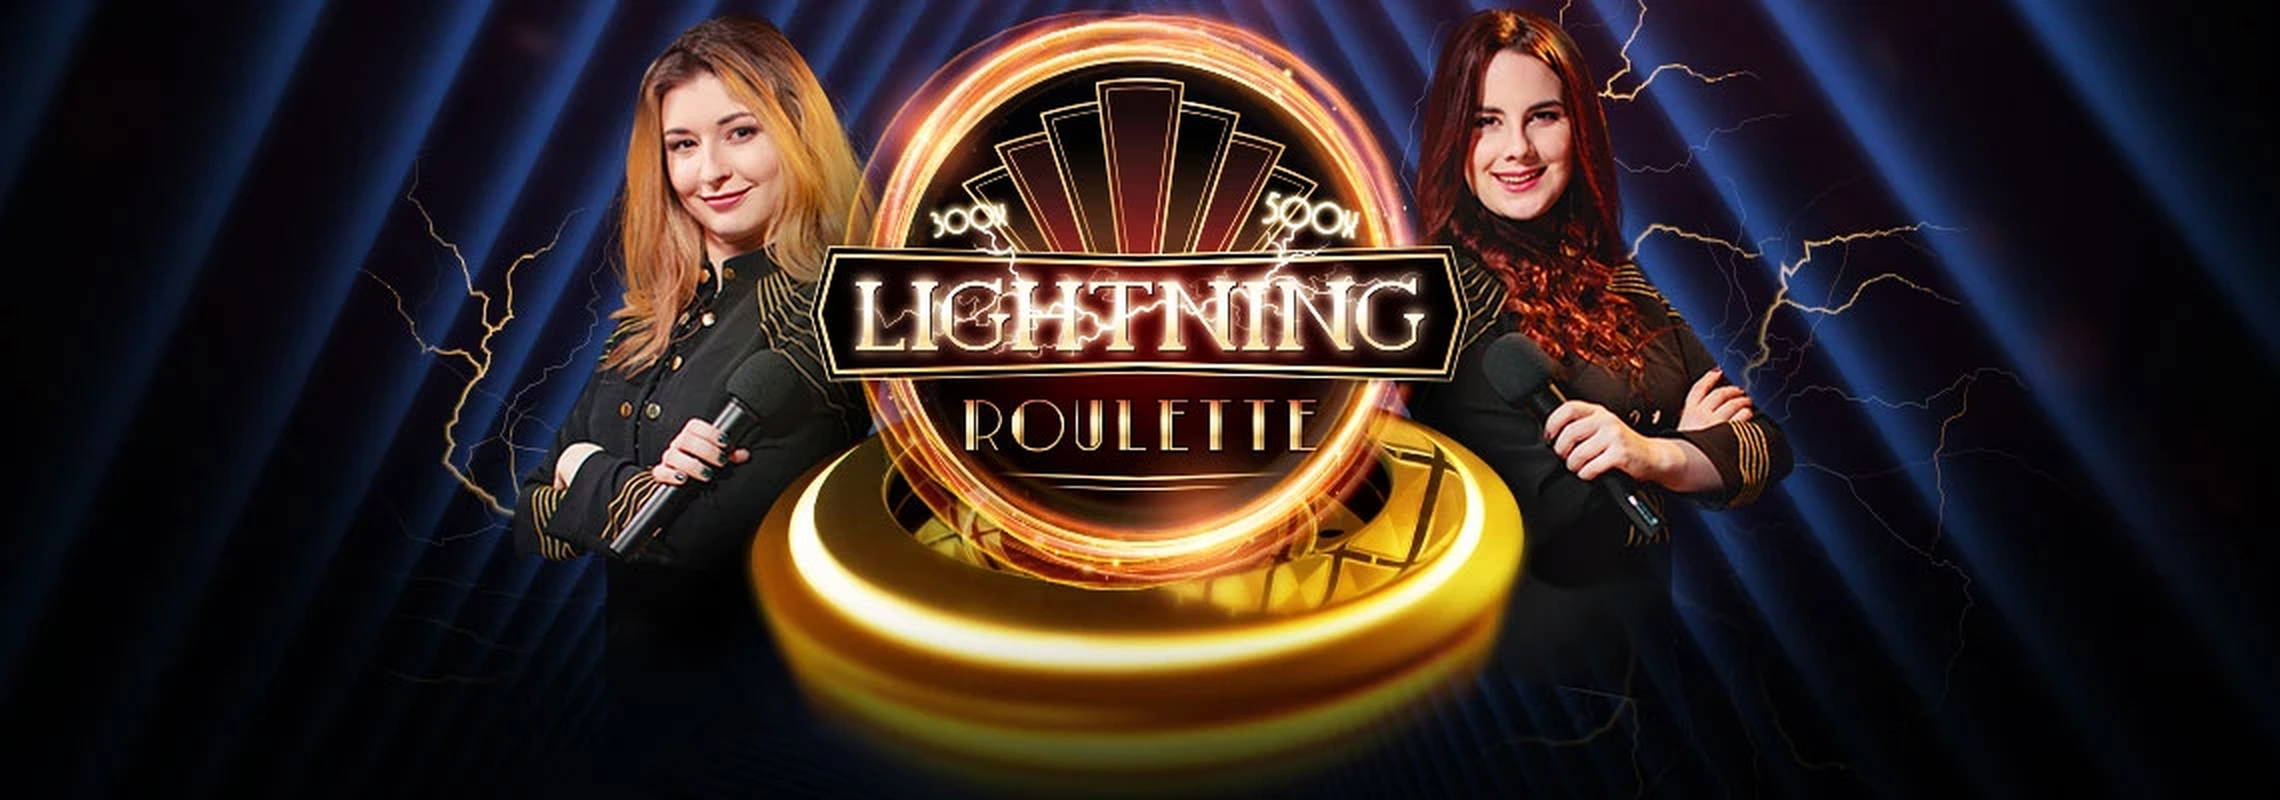 The Lightning Roulette Online Slot Demo Game by Evolution Gaming